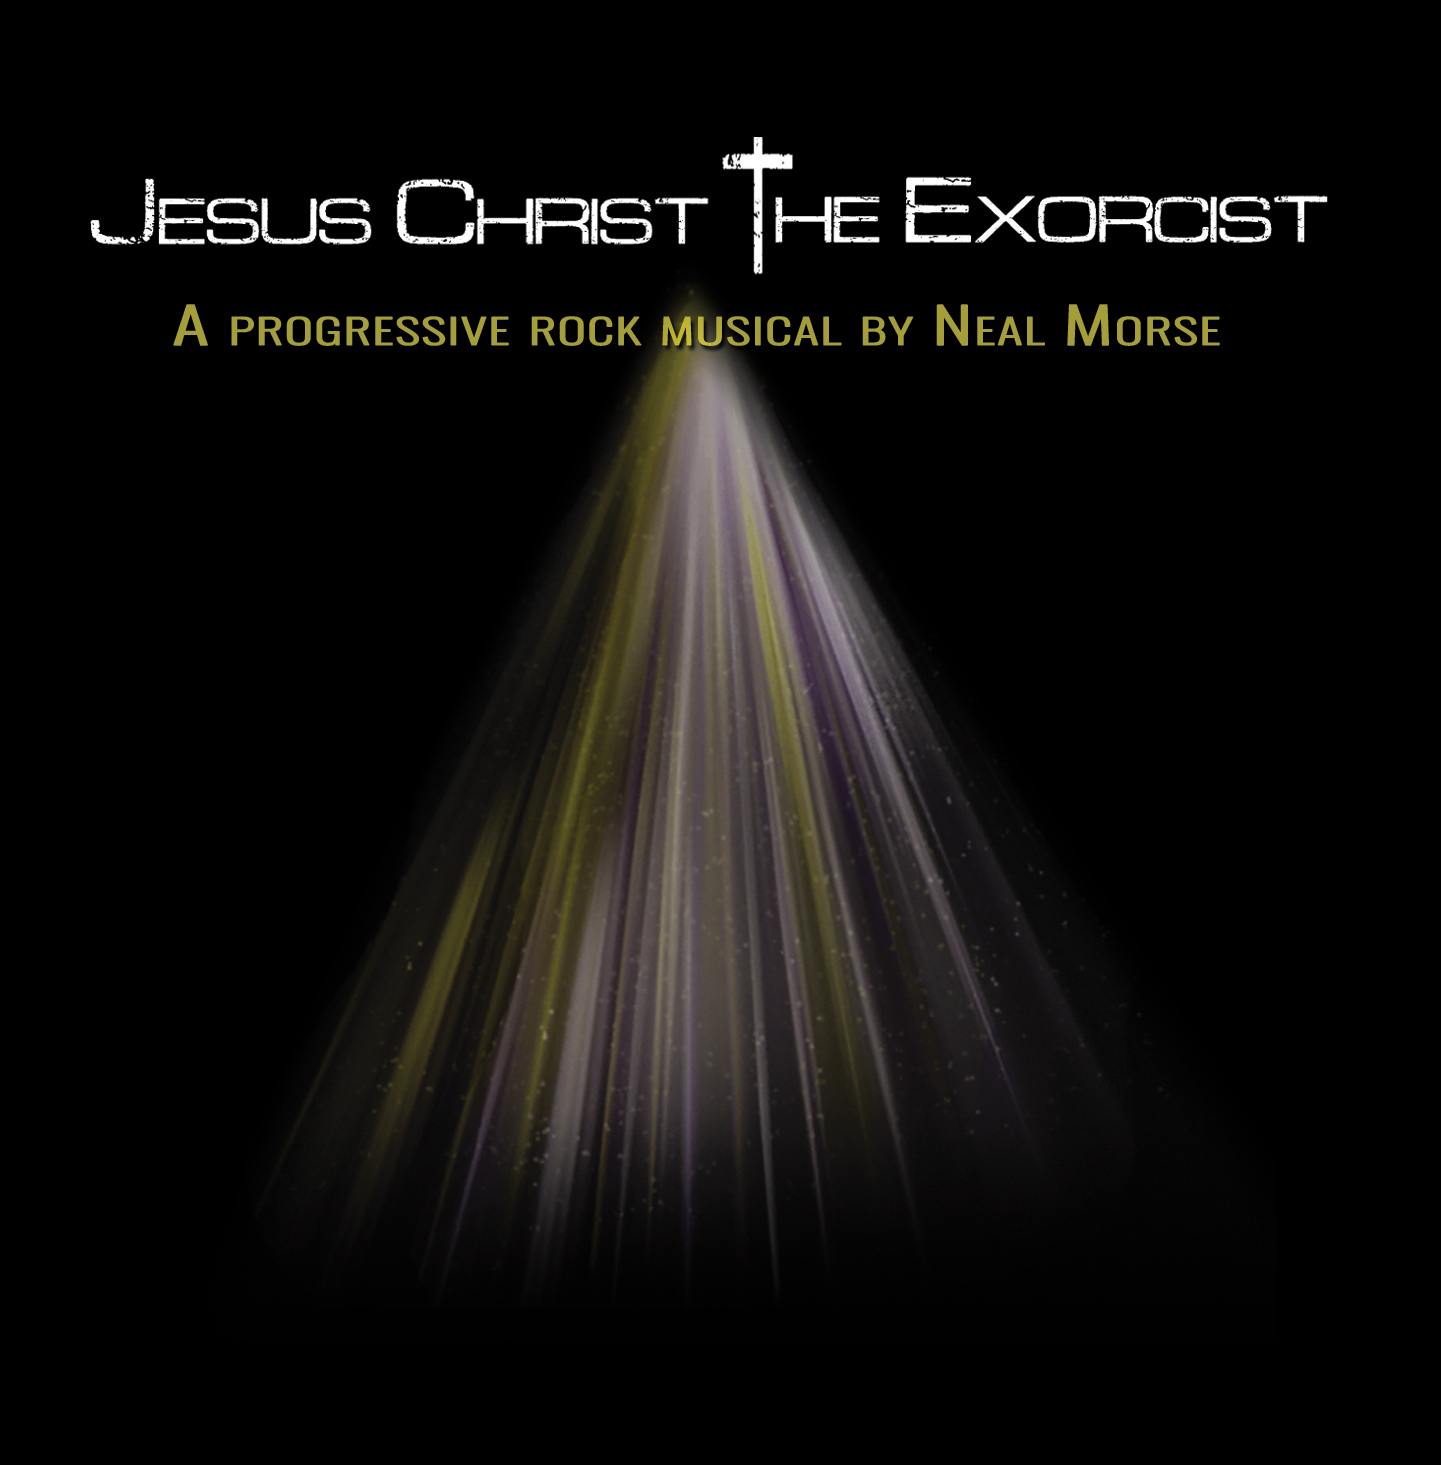 NEAL MORSE - “Jesus Christ the Exorcist”